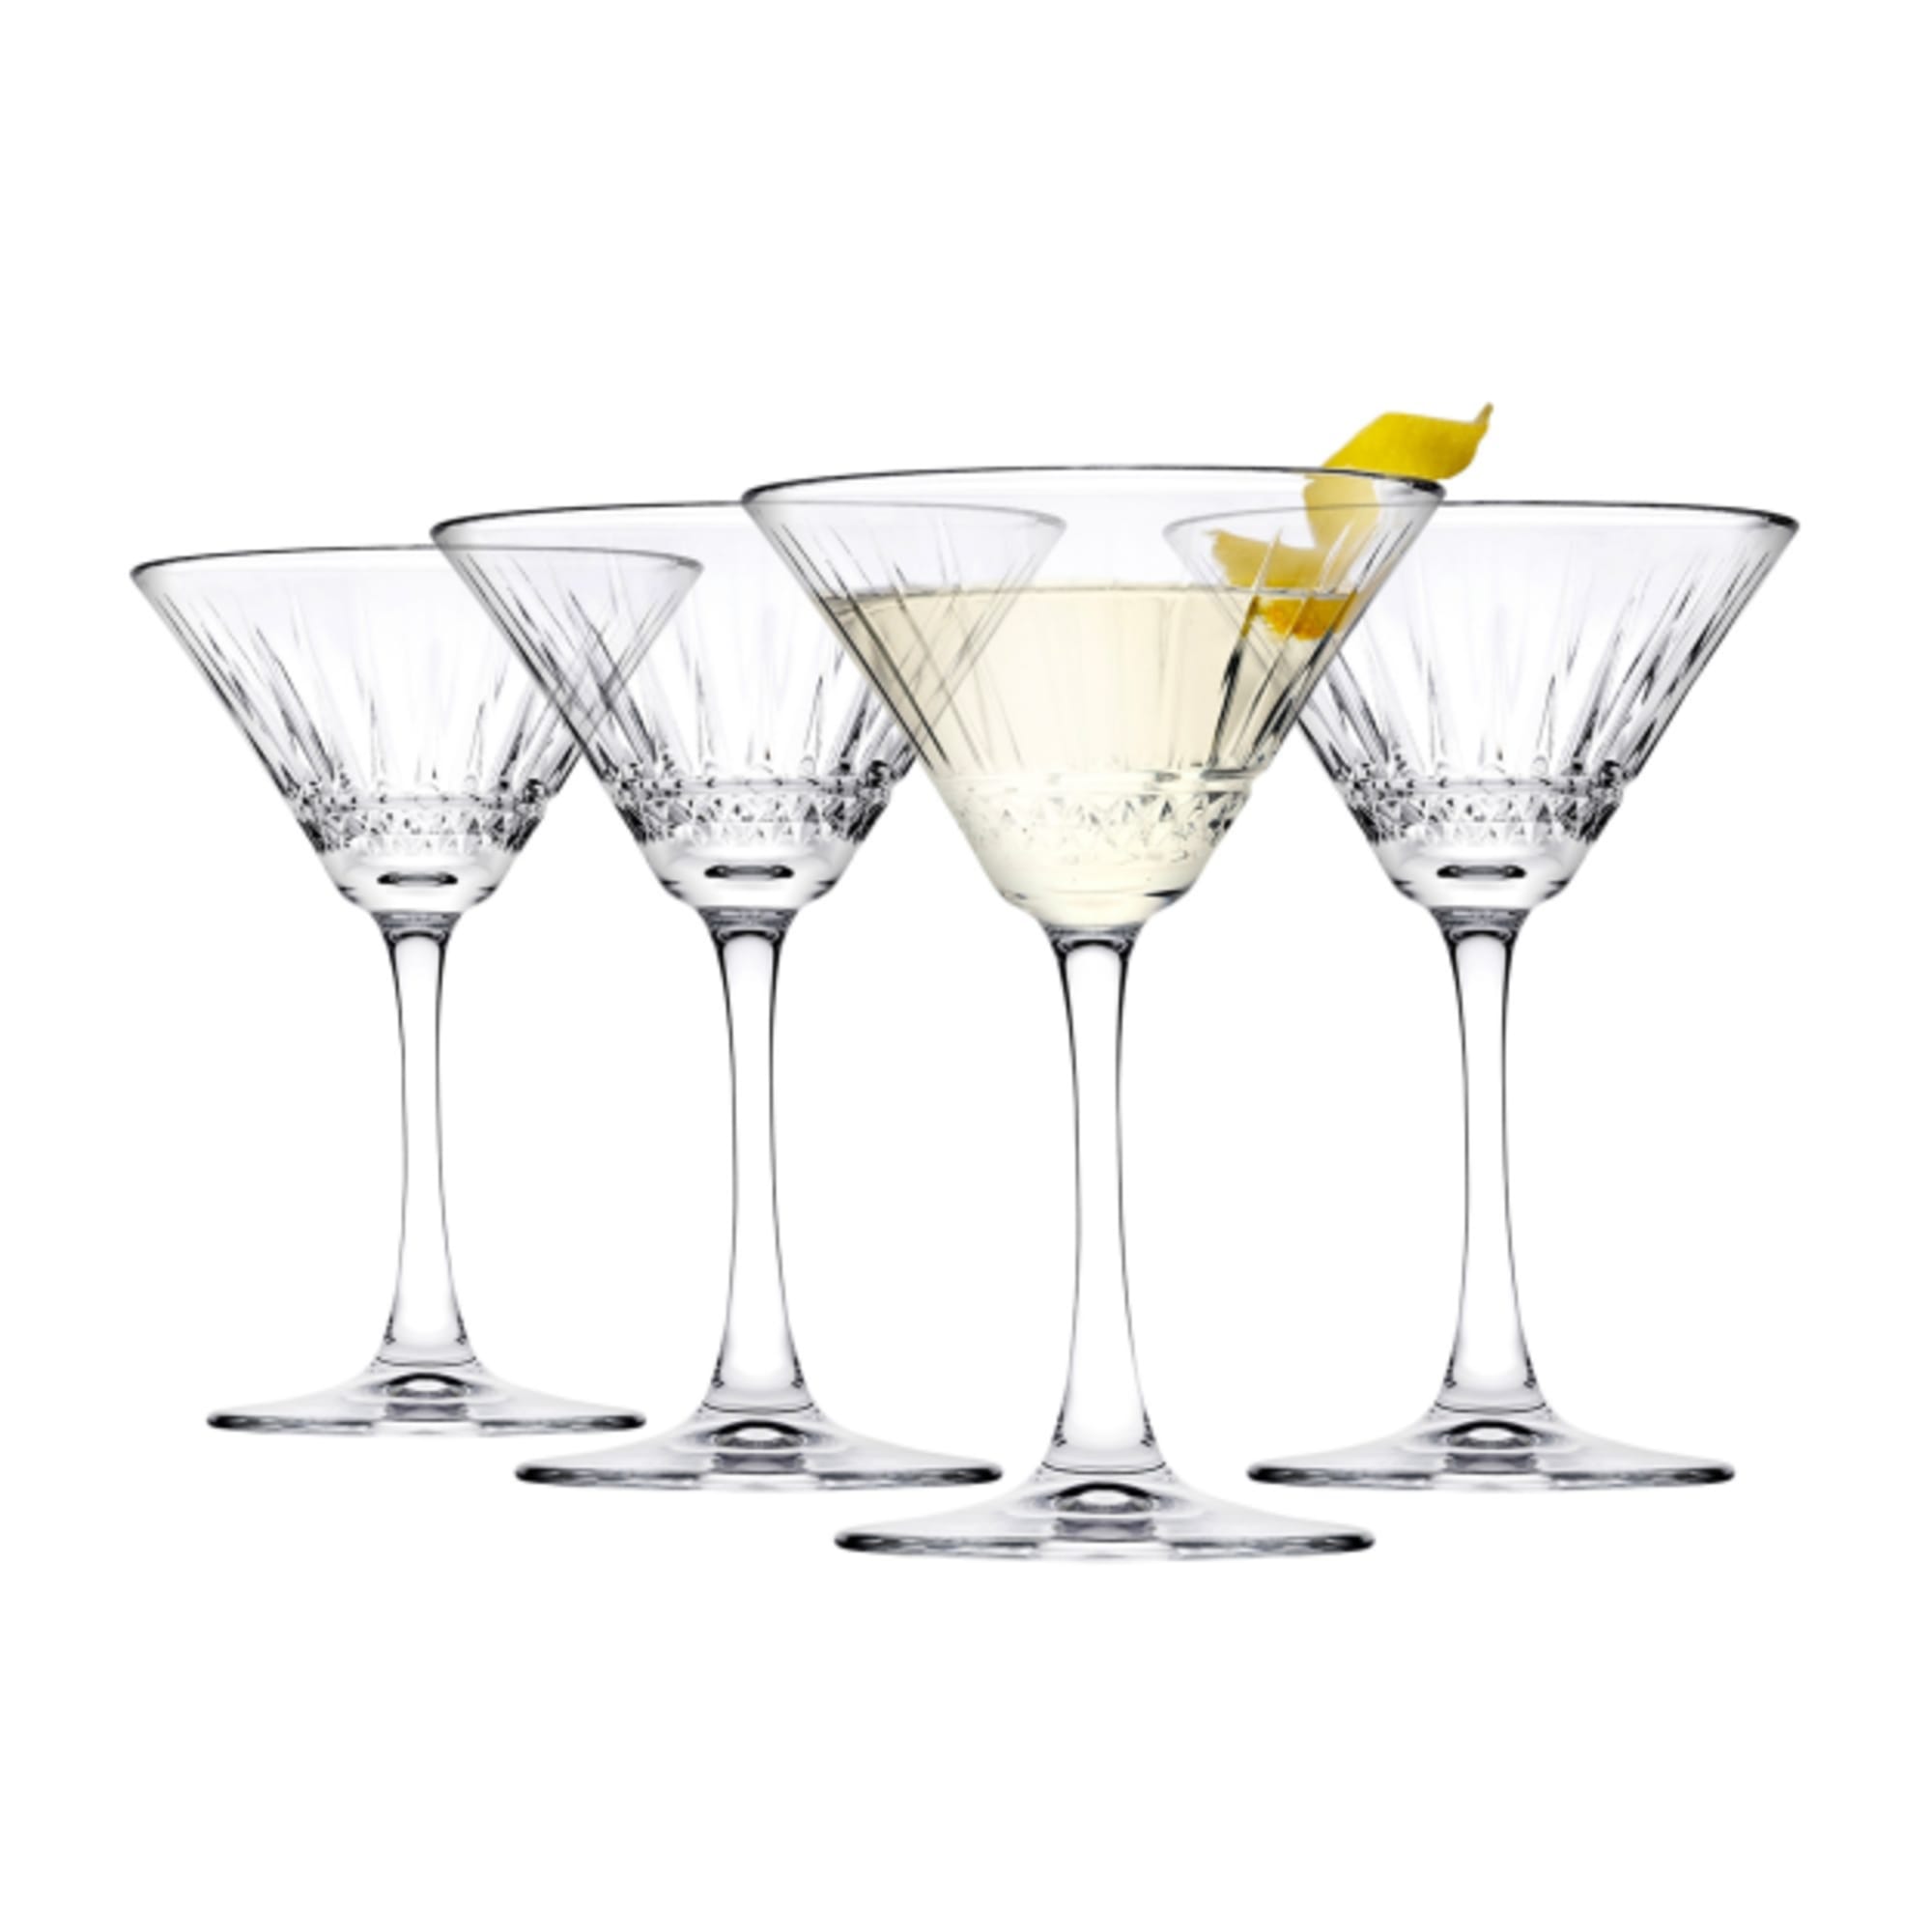  Pasabahce Premium Stemmed Martini Glasses Set of 4